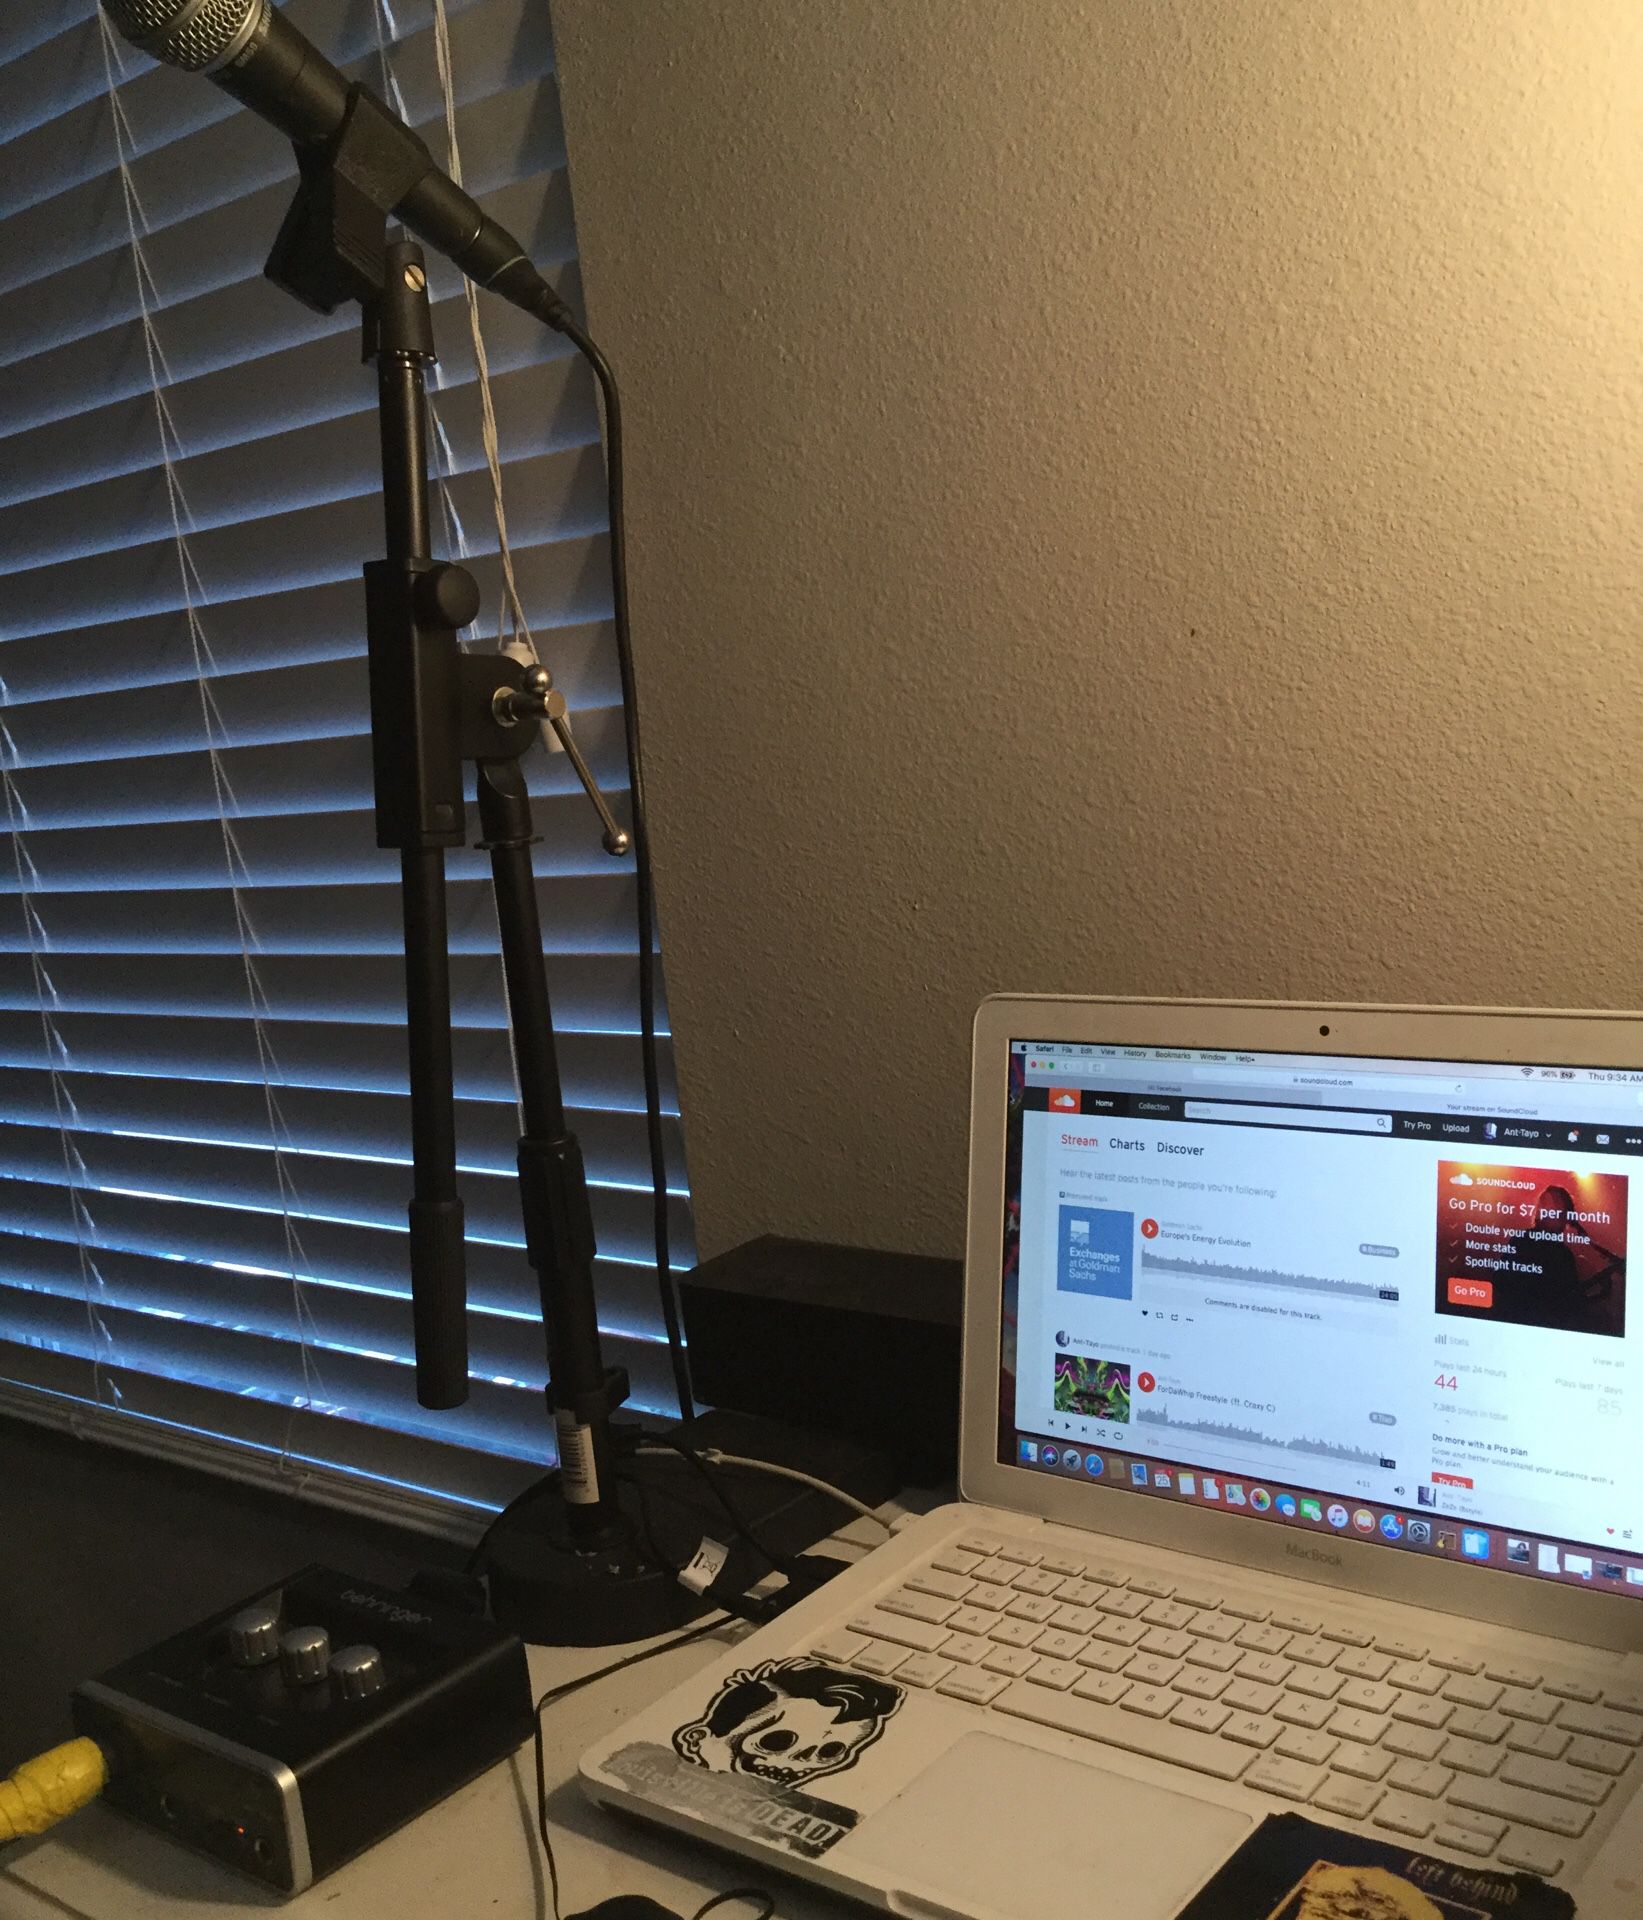 Studio set (MacBook, processor, and computer mouse)